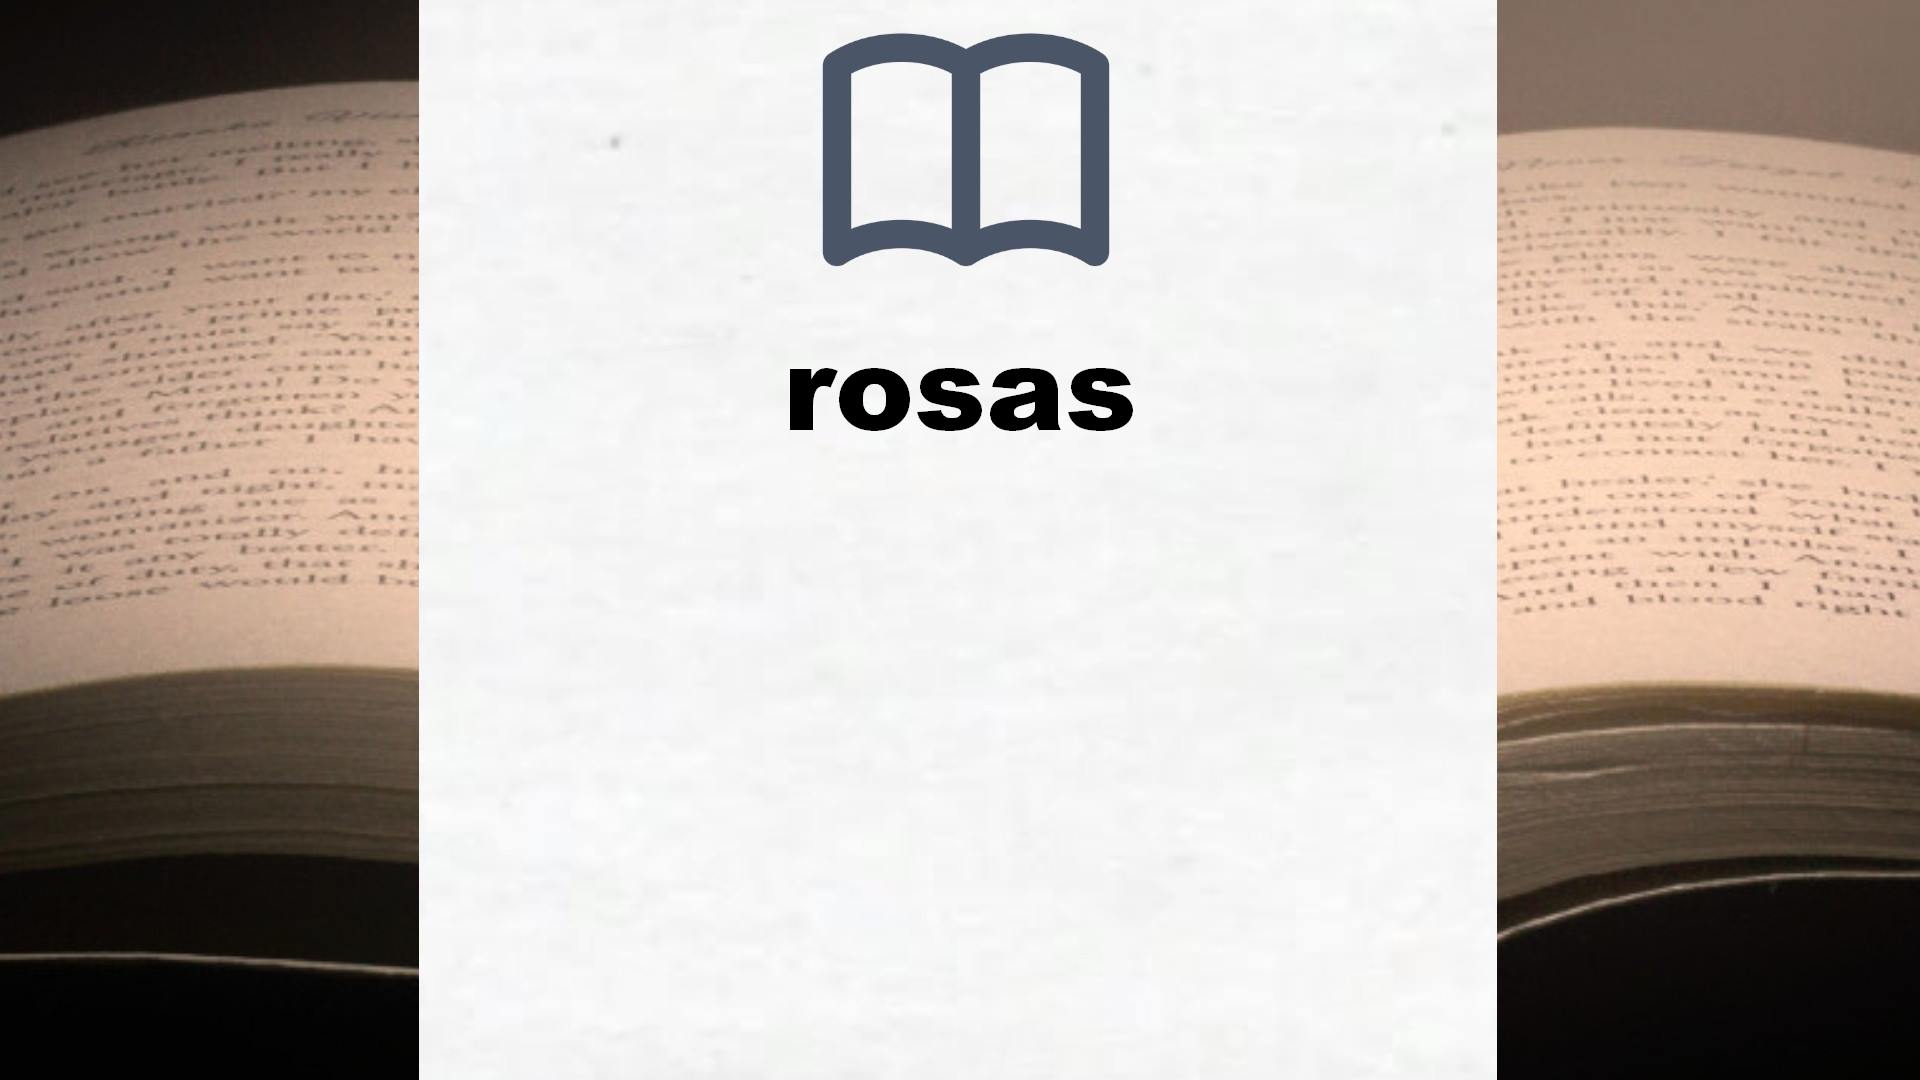 Libros sobre rosas